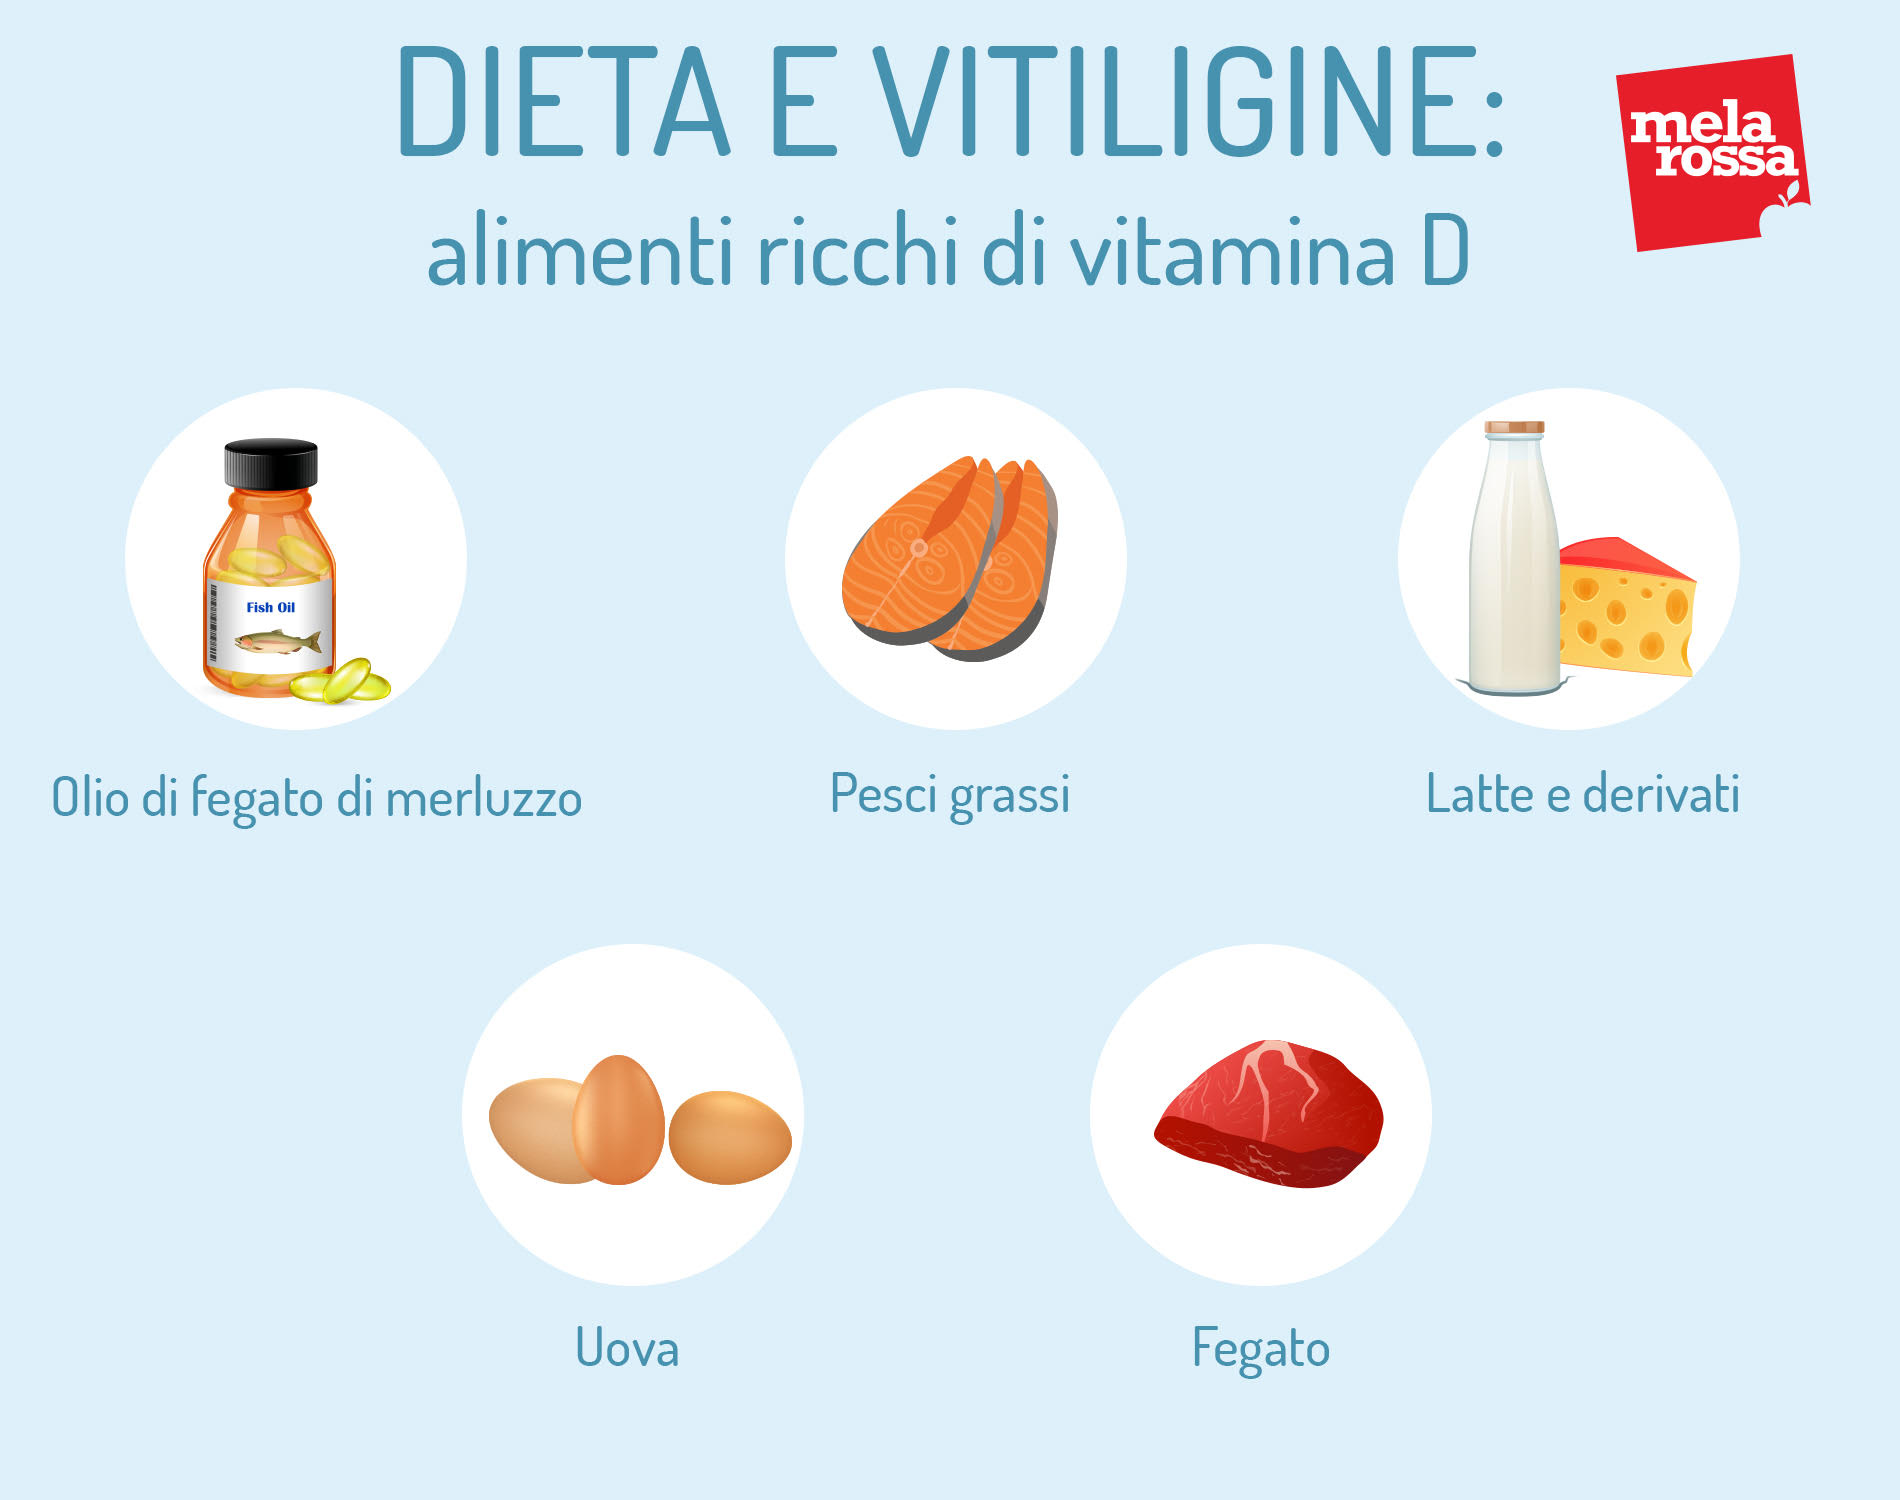 dieta e vitiligine: alimenti ricchi di vitamina D 